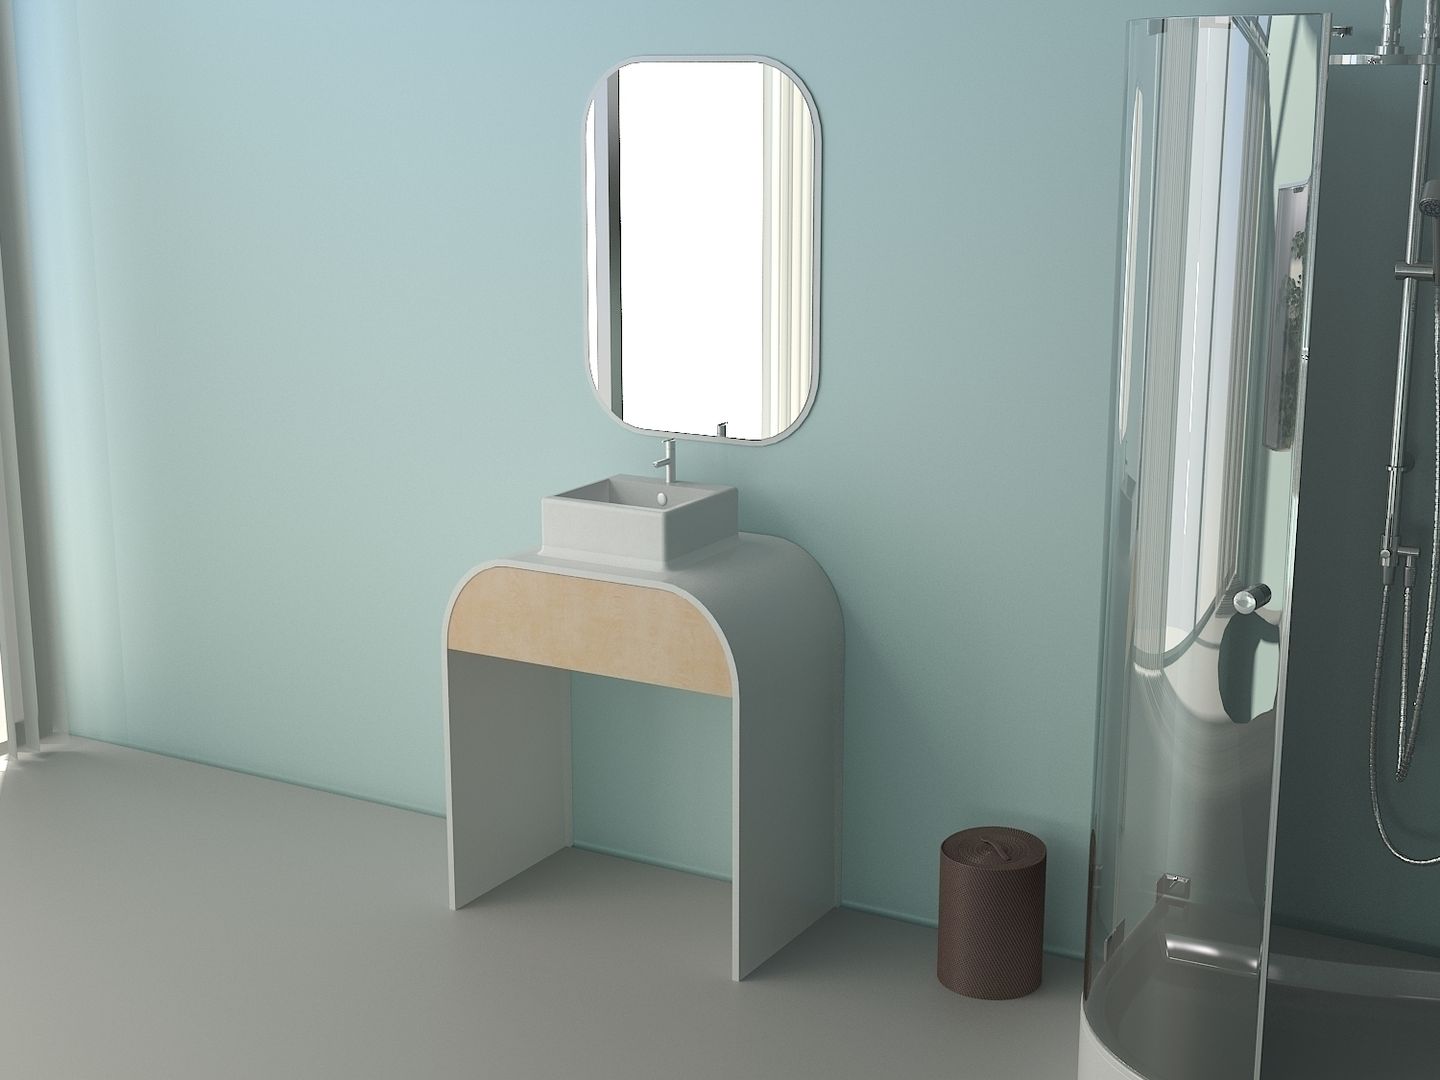 Melt Concept, Tirdad Kiamanesh Tirdad Kiamanesh Minimalist style bathroom Medicine cabinets